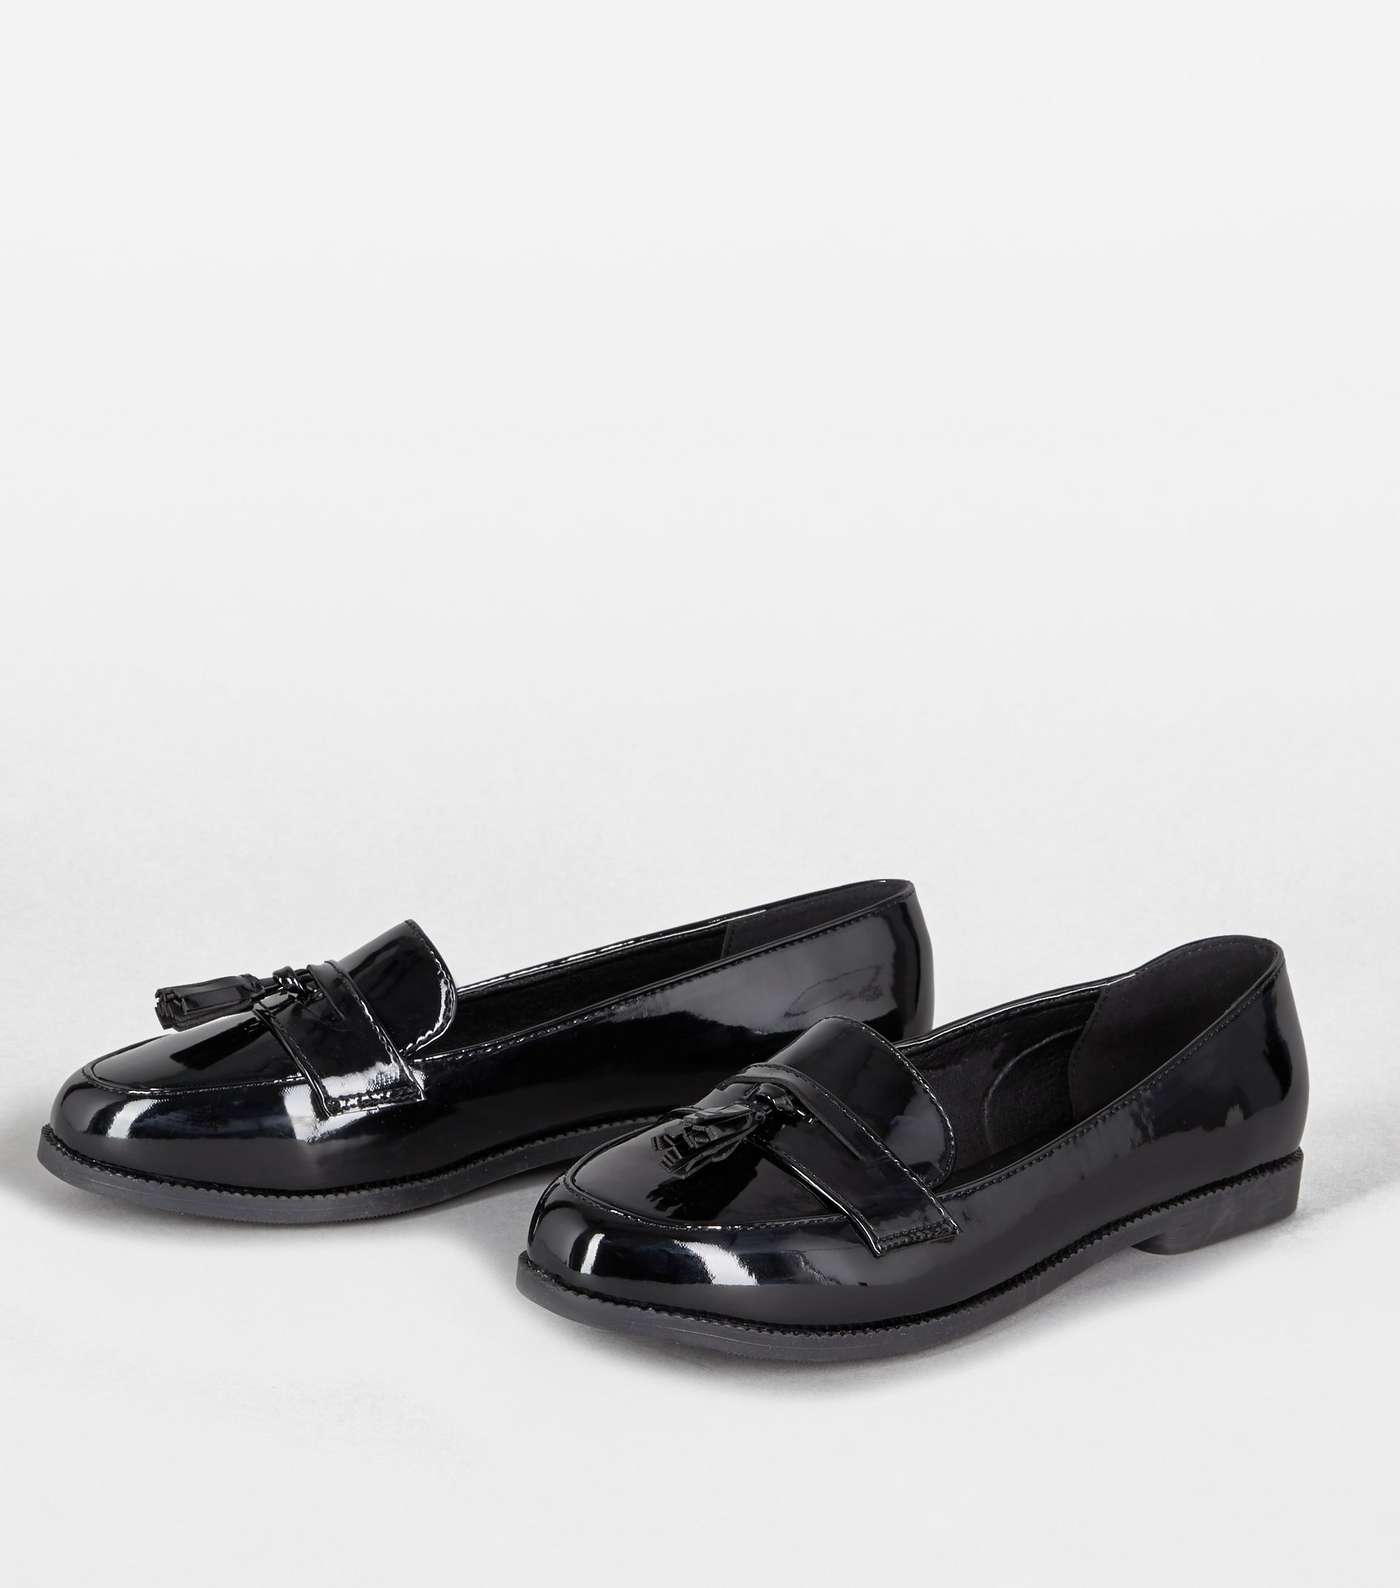 Girls Black Patent Tassel Loafers Image 2